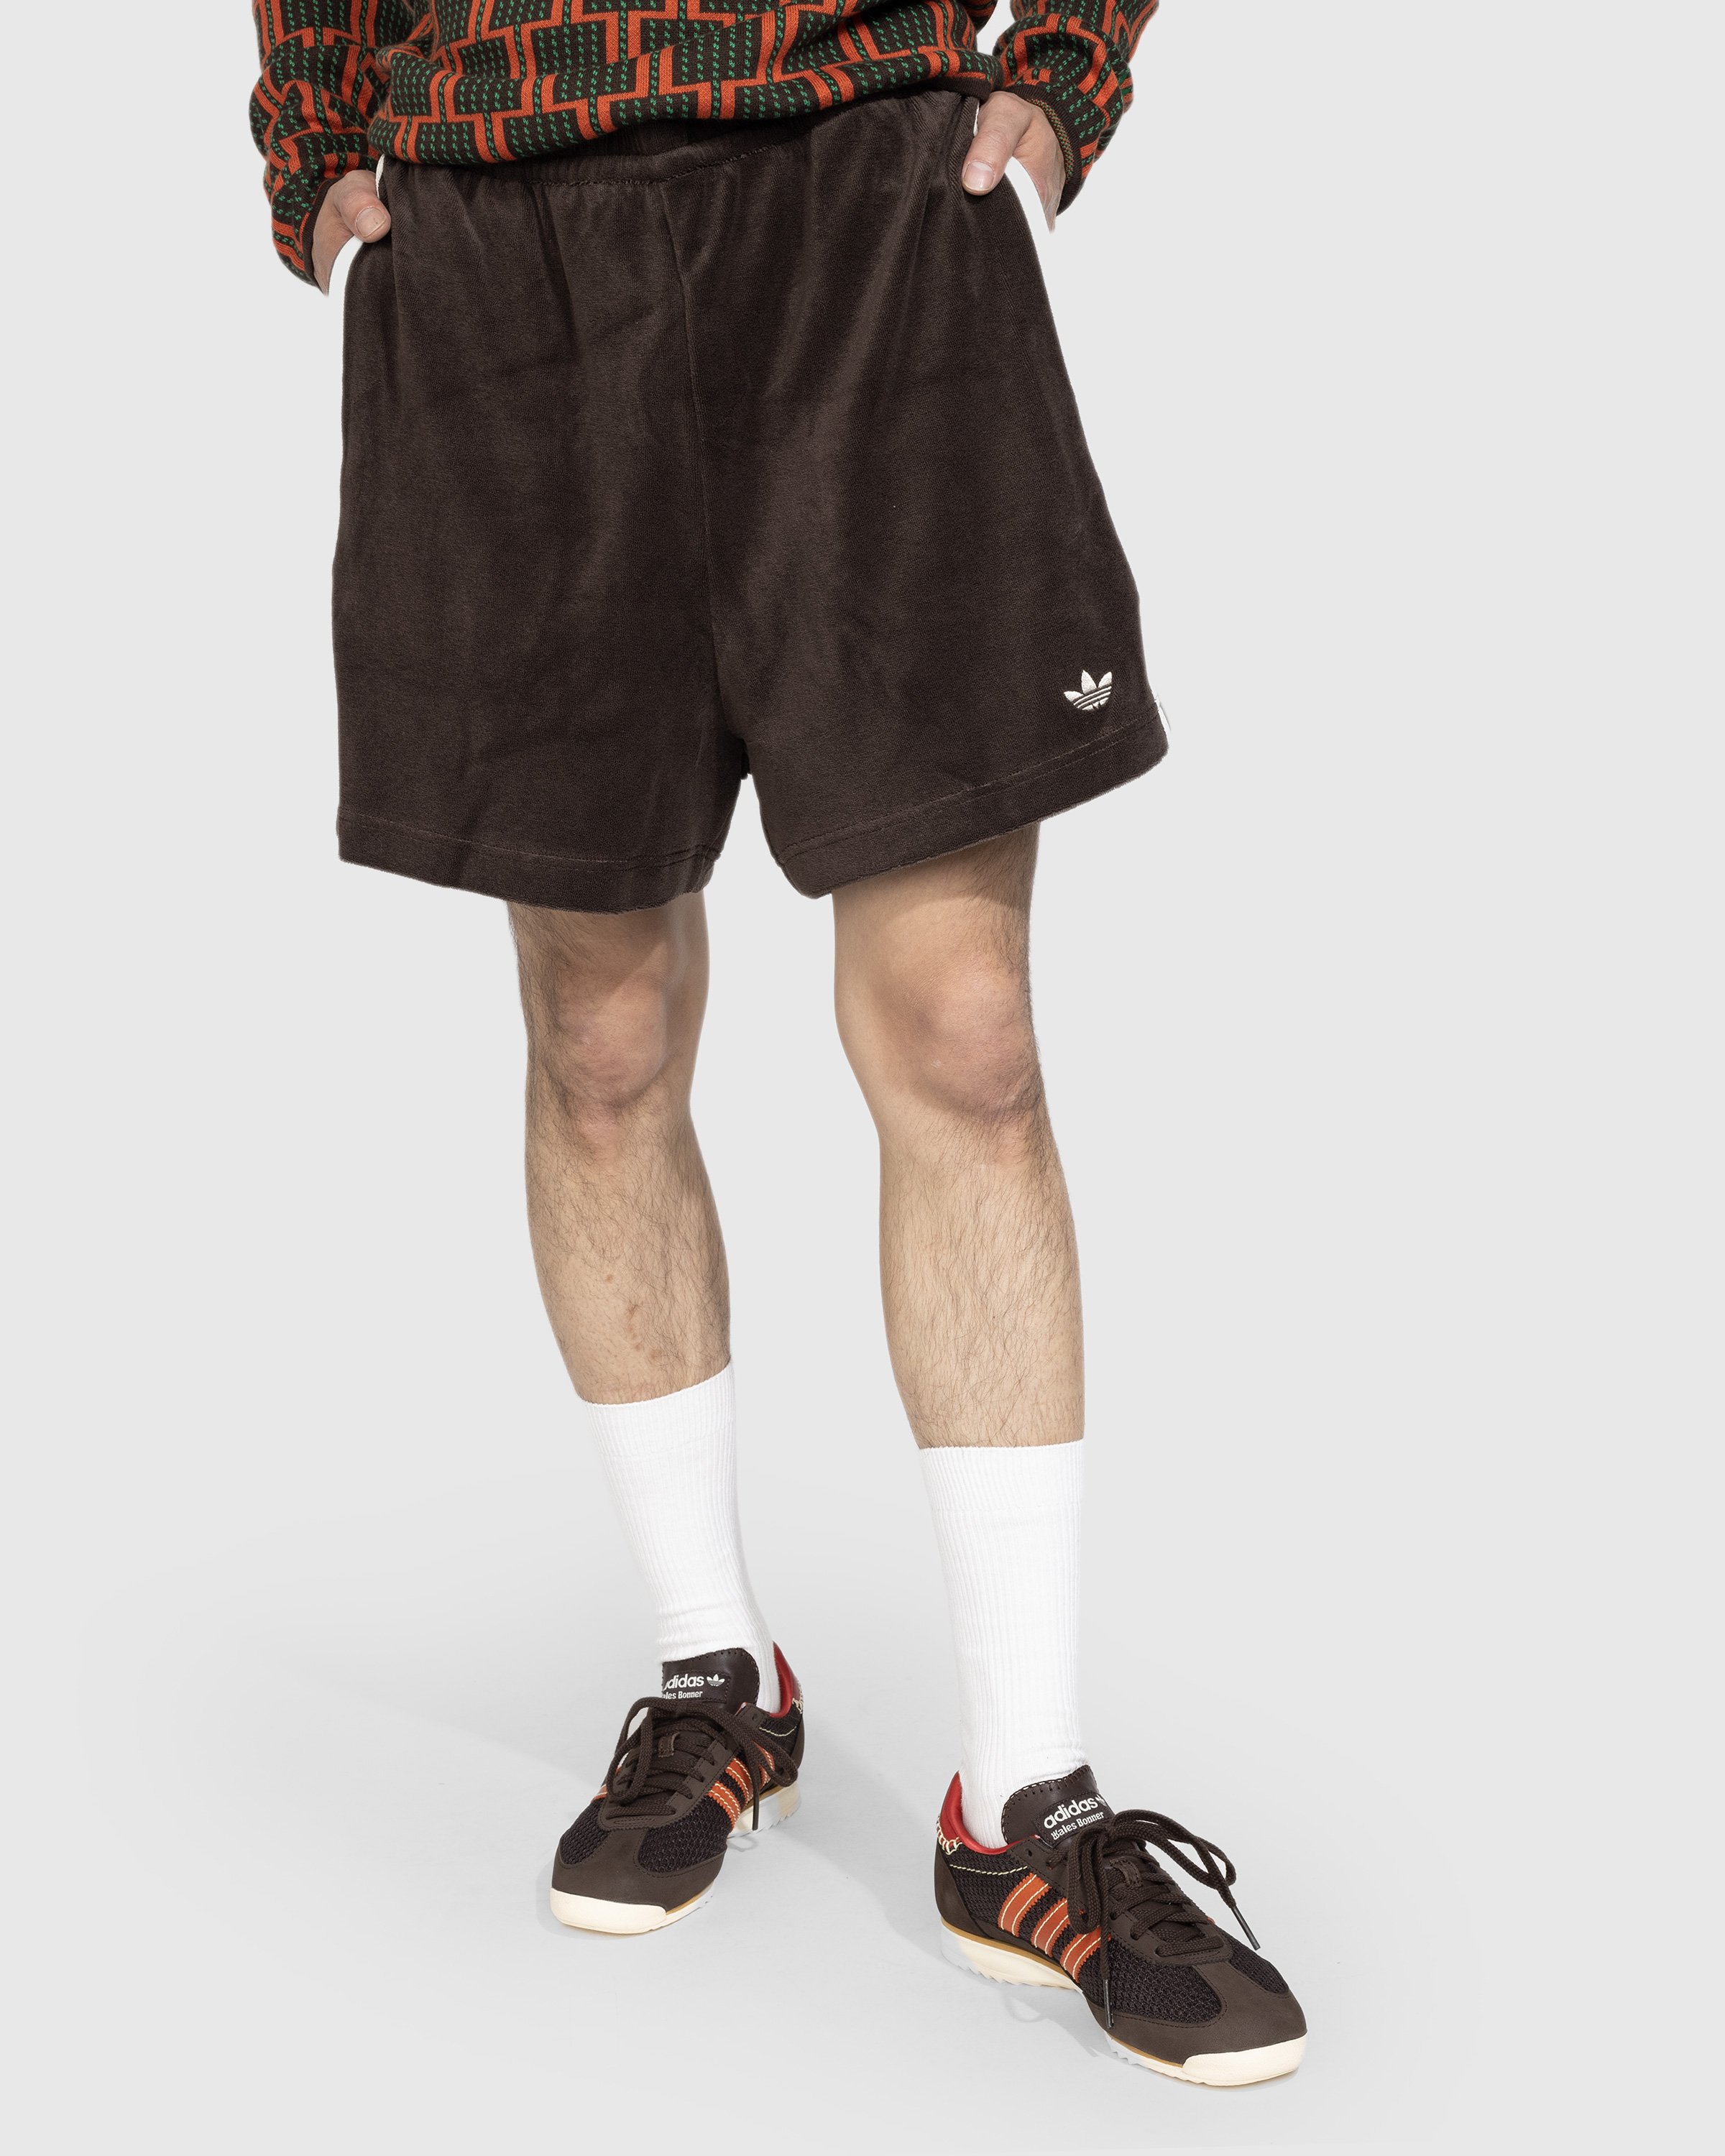 Adidas x Wales Bonner - Cotton Blend Shorts Dark Brown - Clothing - Brown - Image 2